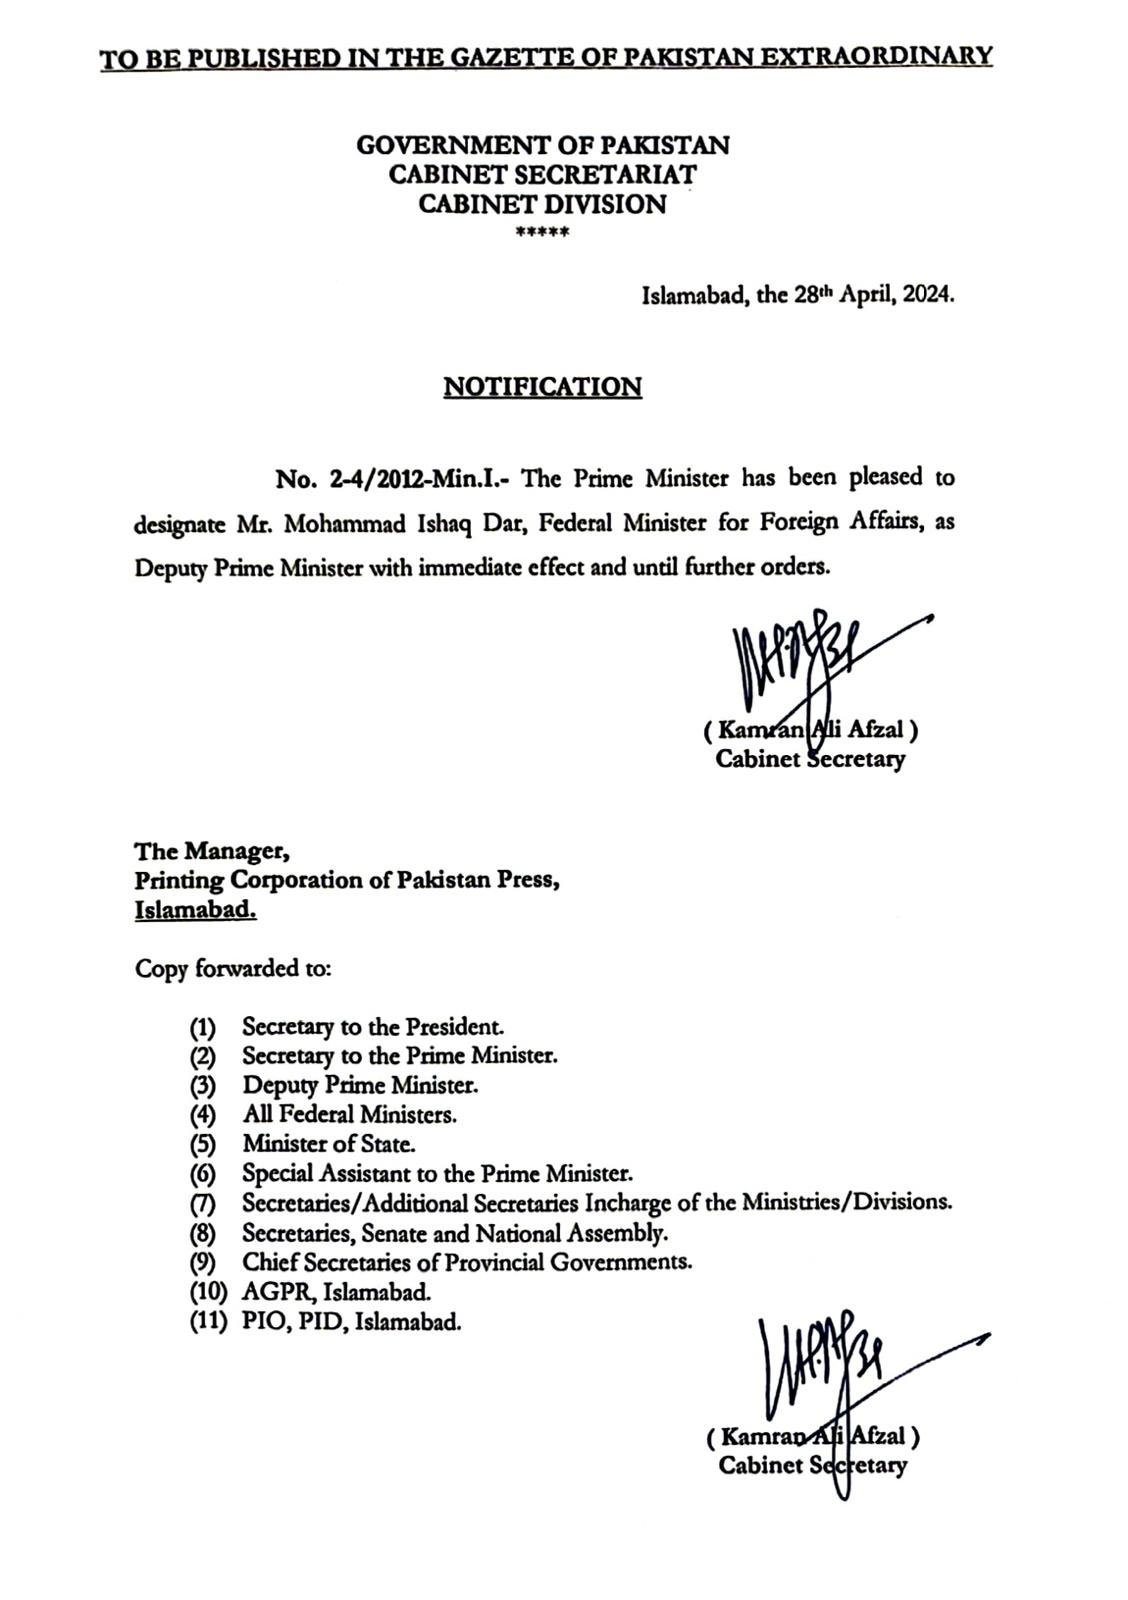 Deputy Prime Minister FM Ishaq Dar appointed